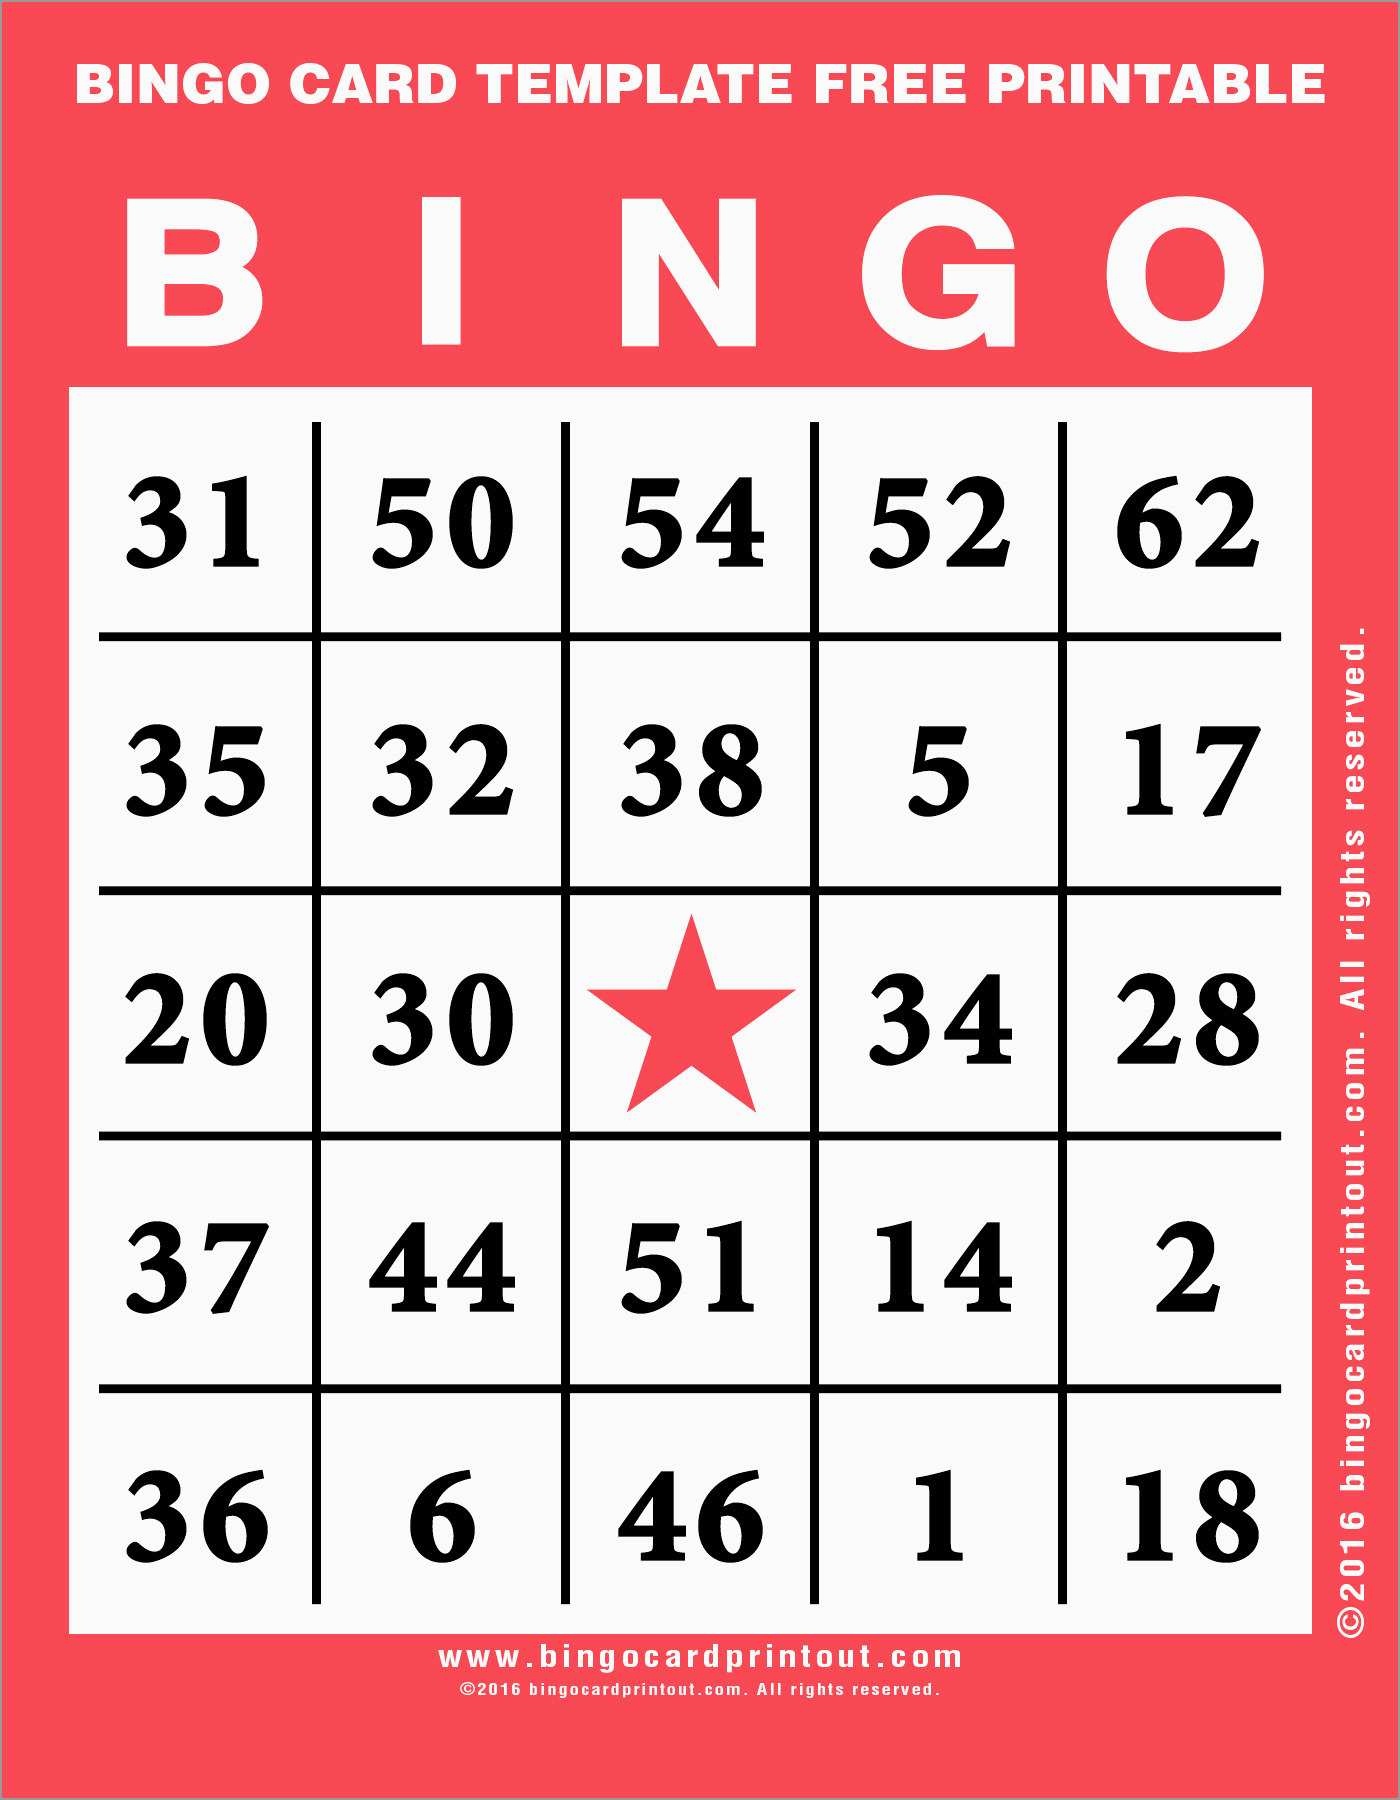 Bingo Card Template Free Great Free Printable Bingo Cards Template - Free Printable Bingo Cards